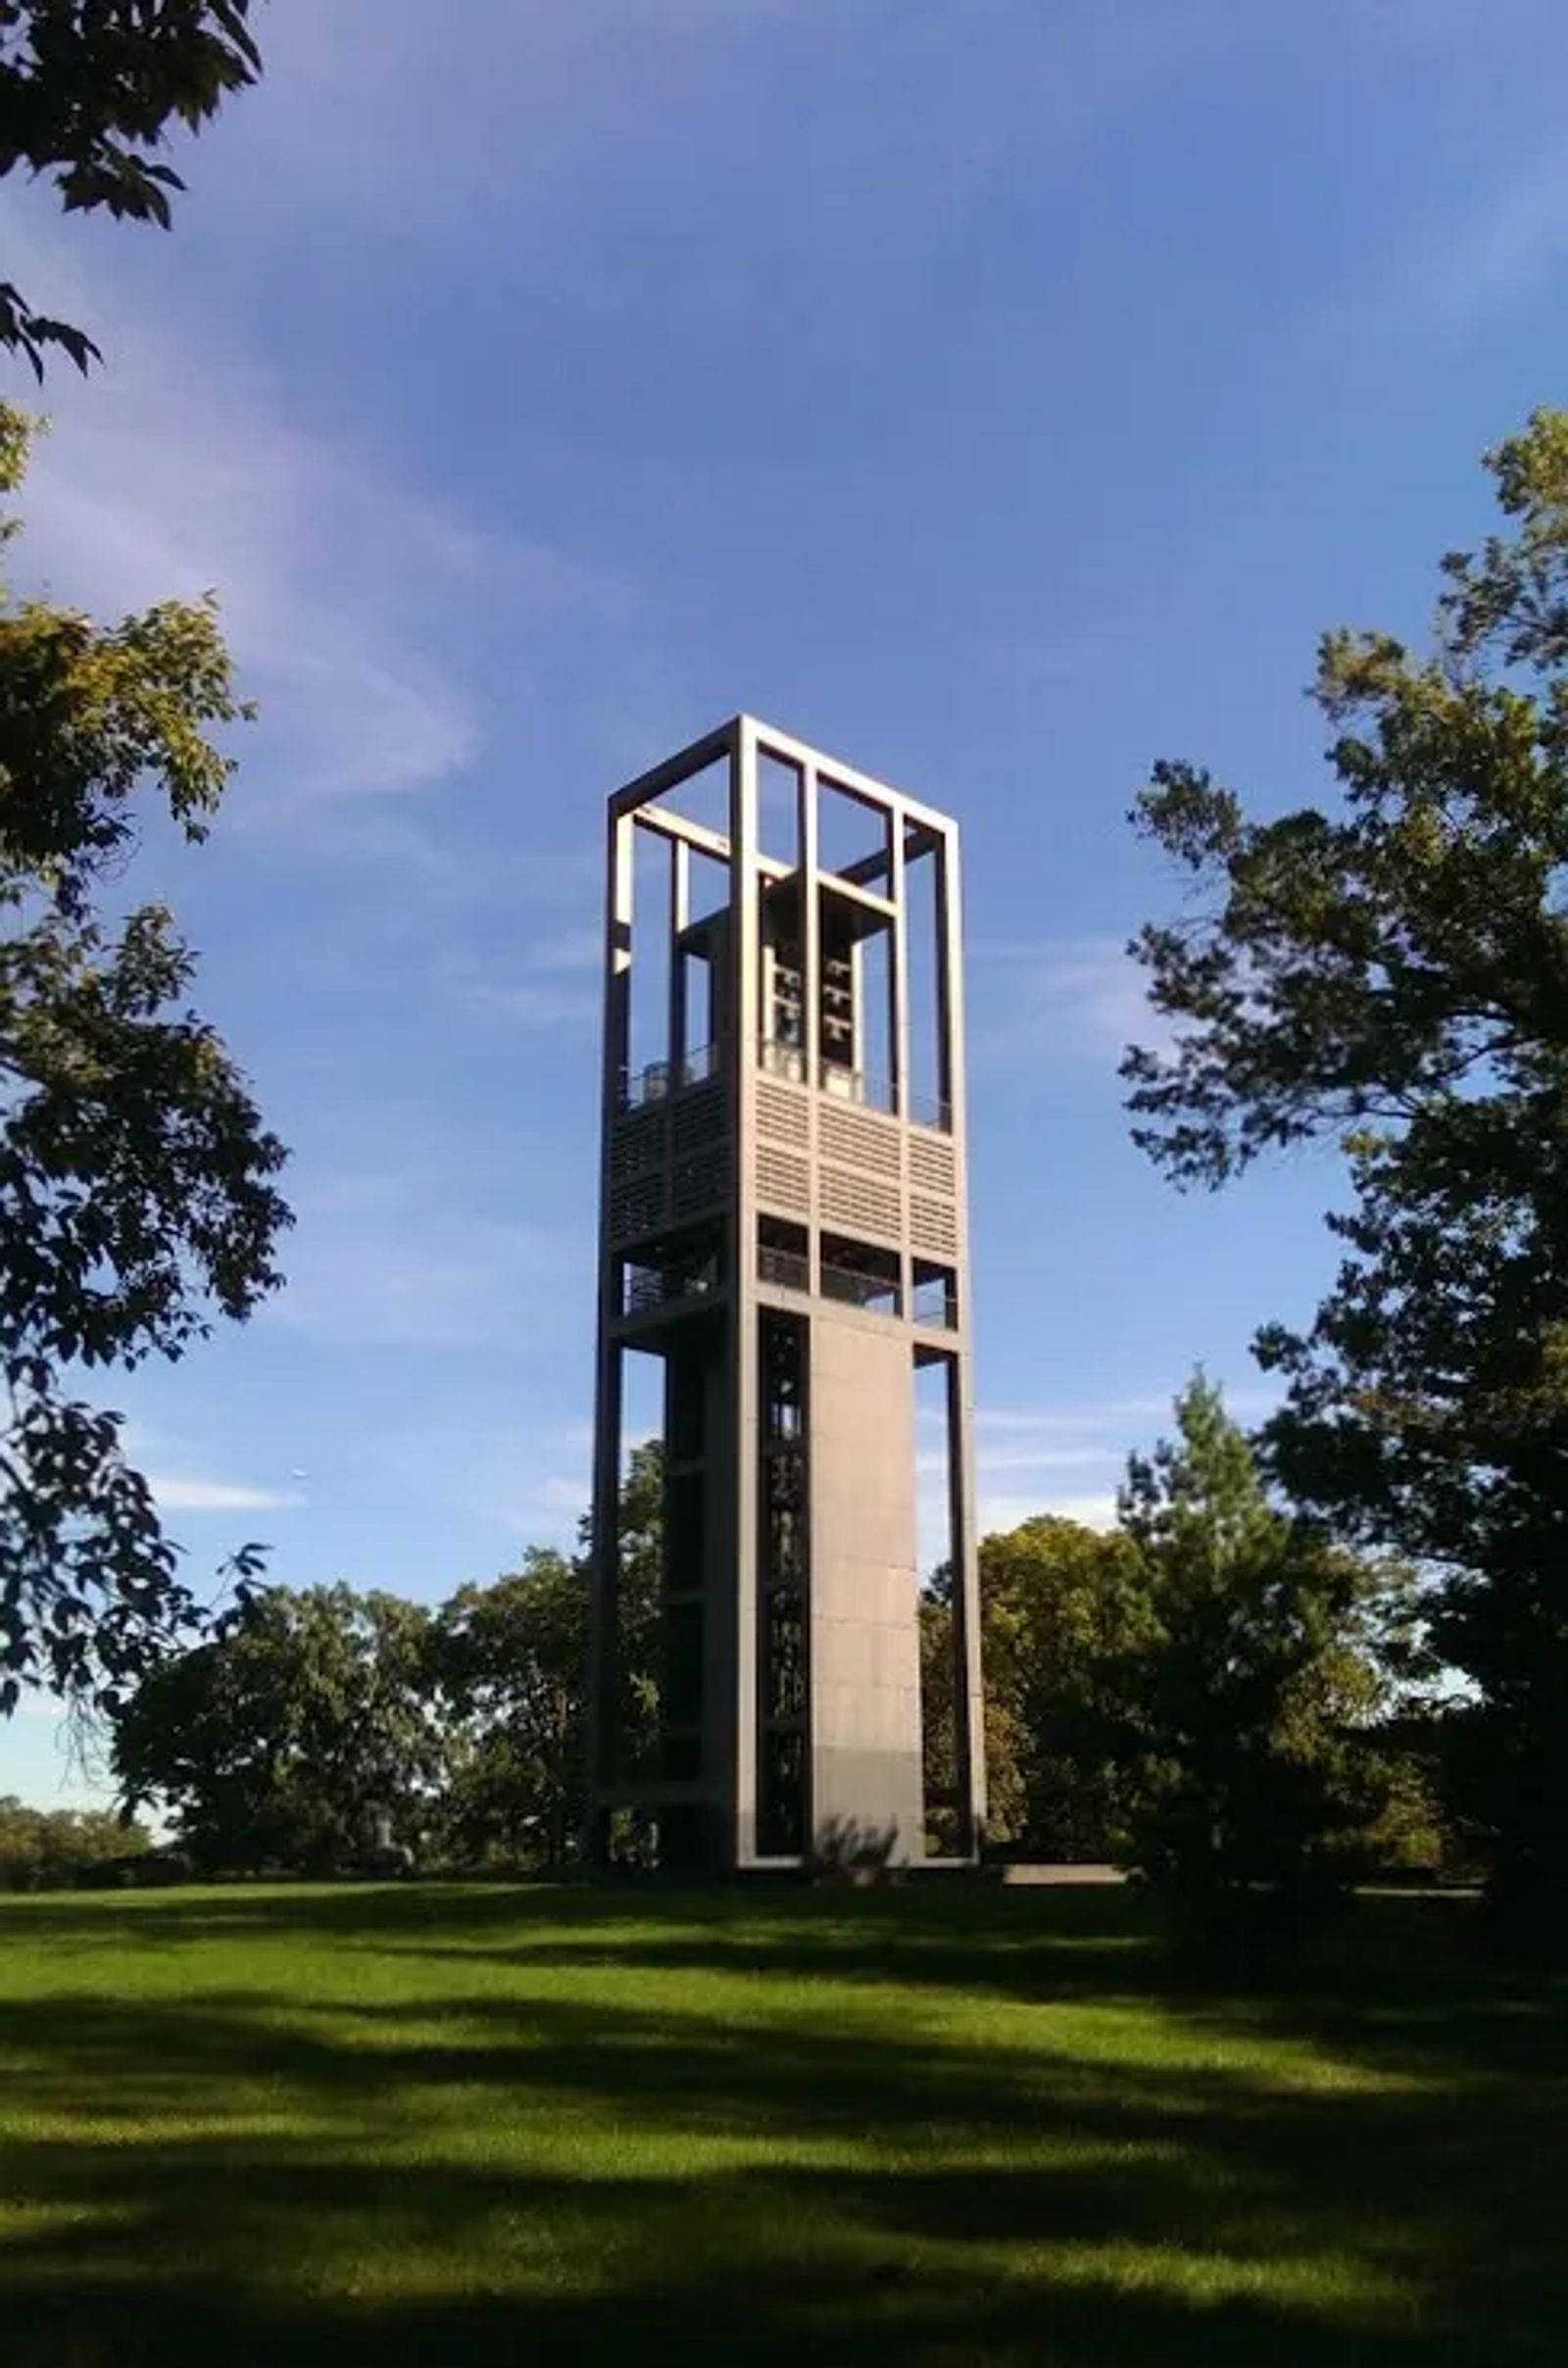 Photo of The Netherlands Carillon near Arlington National Cemetery